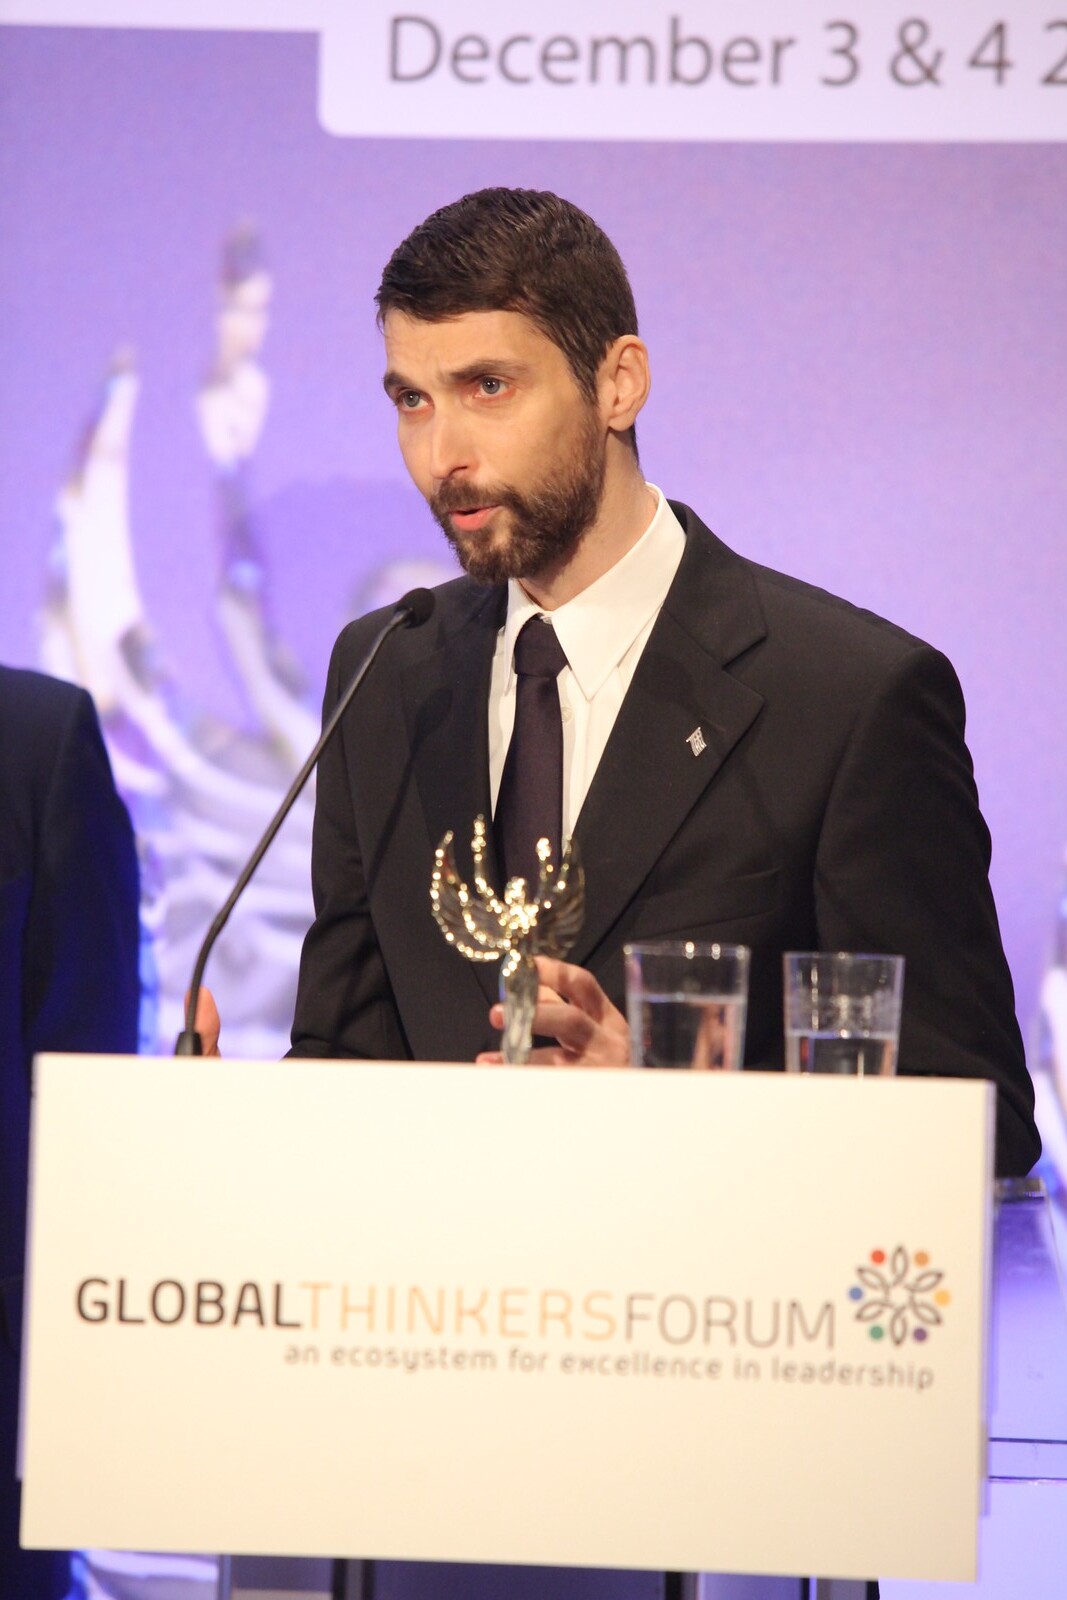 Nikos Floros, GTF 2013 Award for Excellence in Innovation